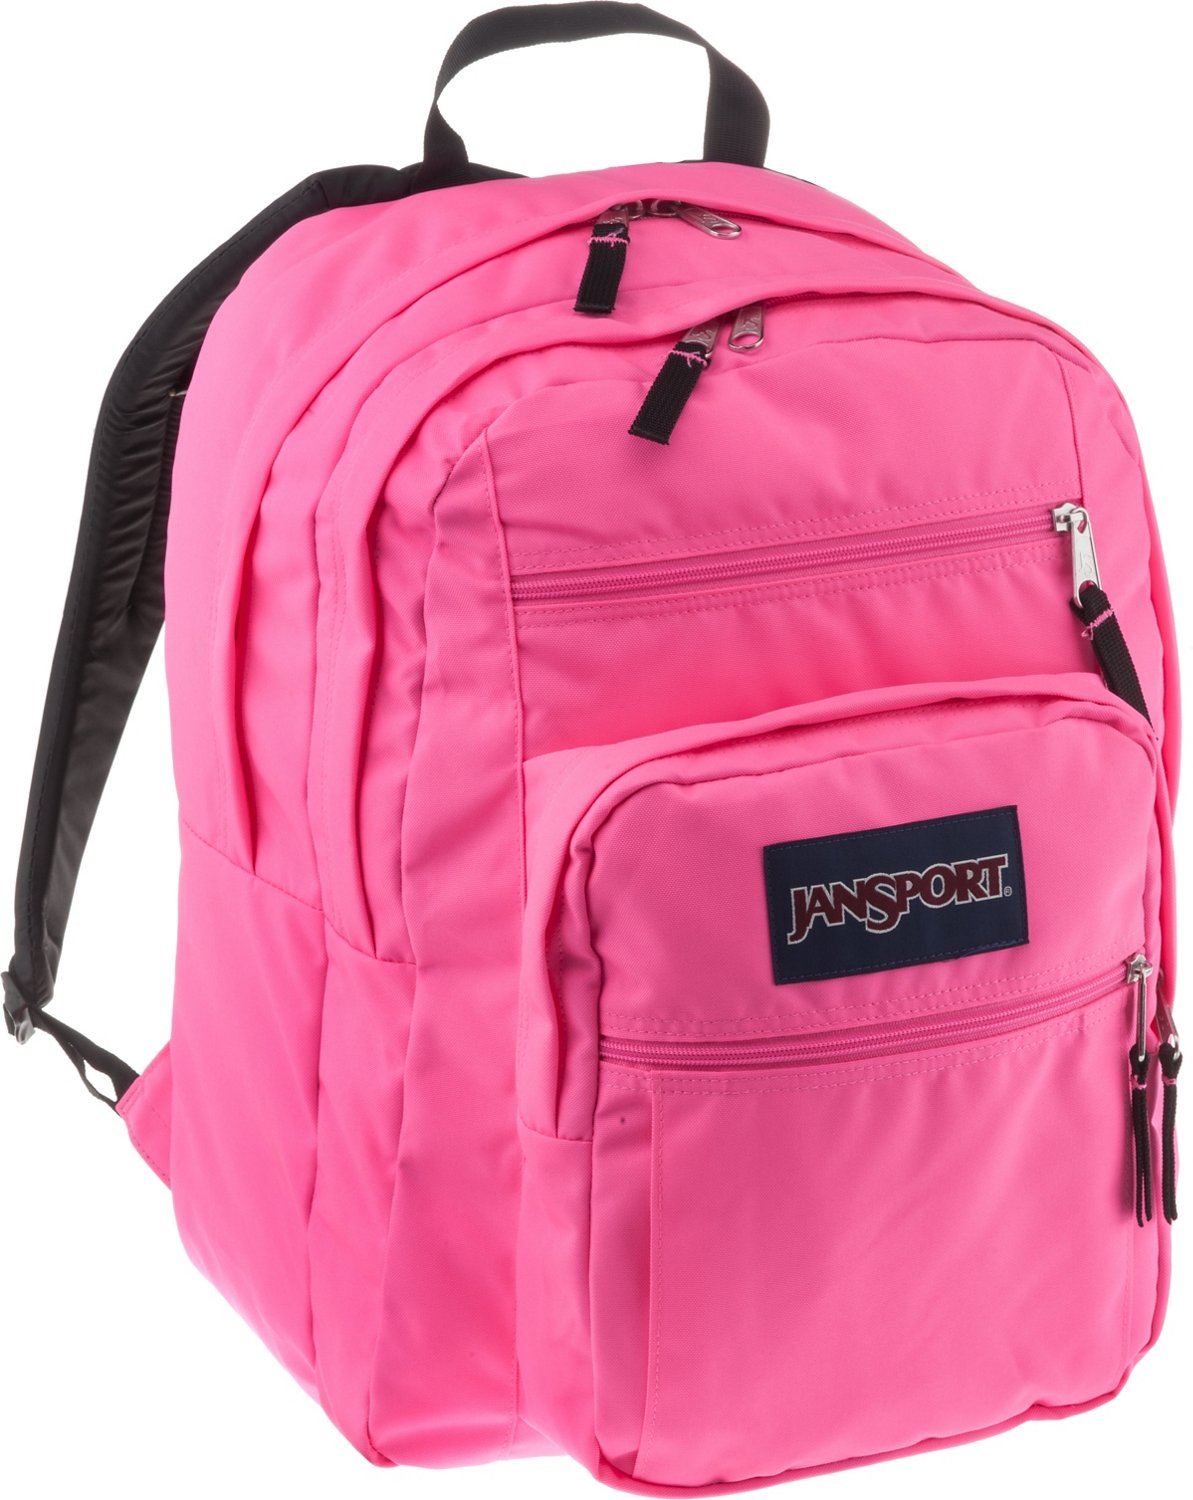 Jansport big student backpack jcpenney, battery pack for camping fridge ...